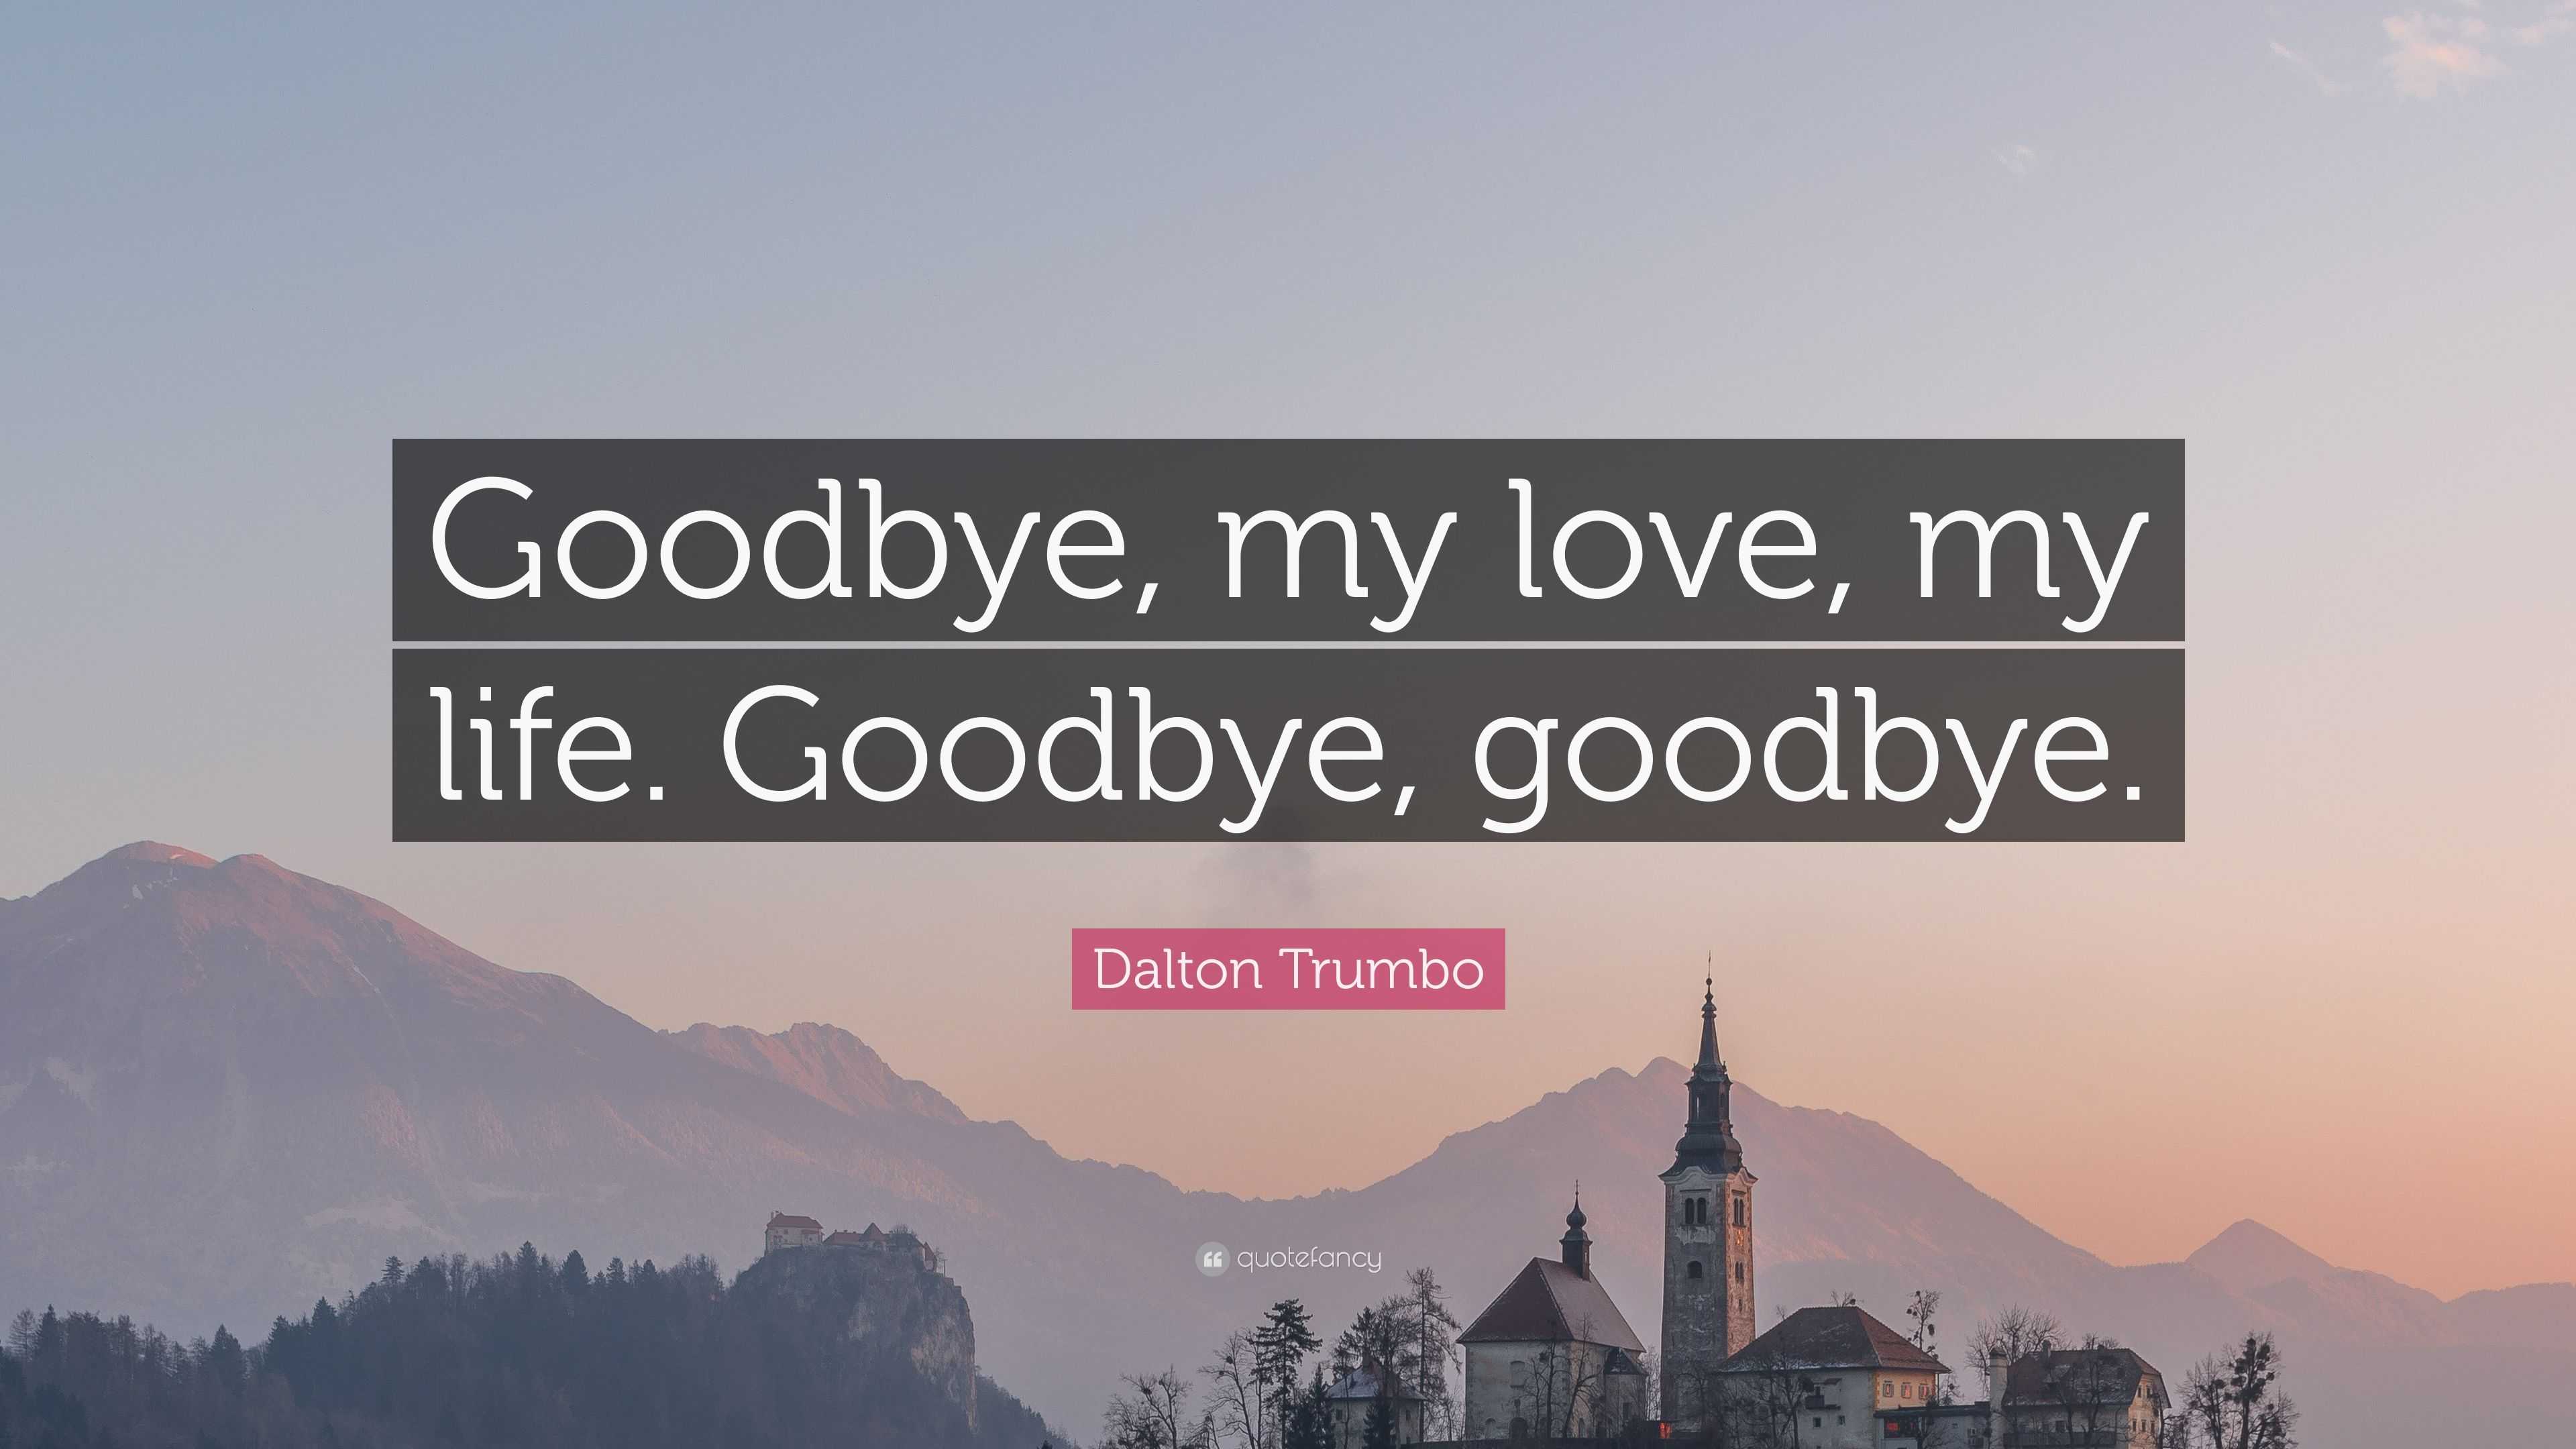 Dalton Trumbo Quote “Goodbye my love my life Goodbye goodbye